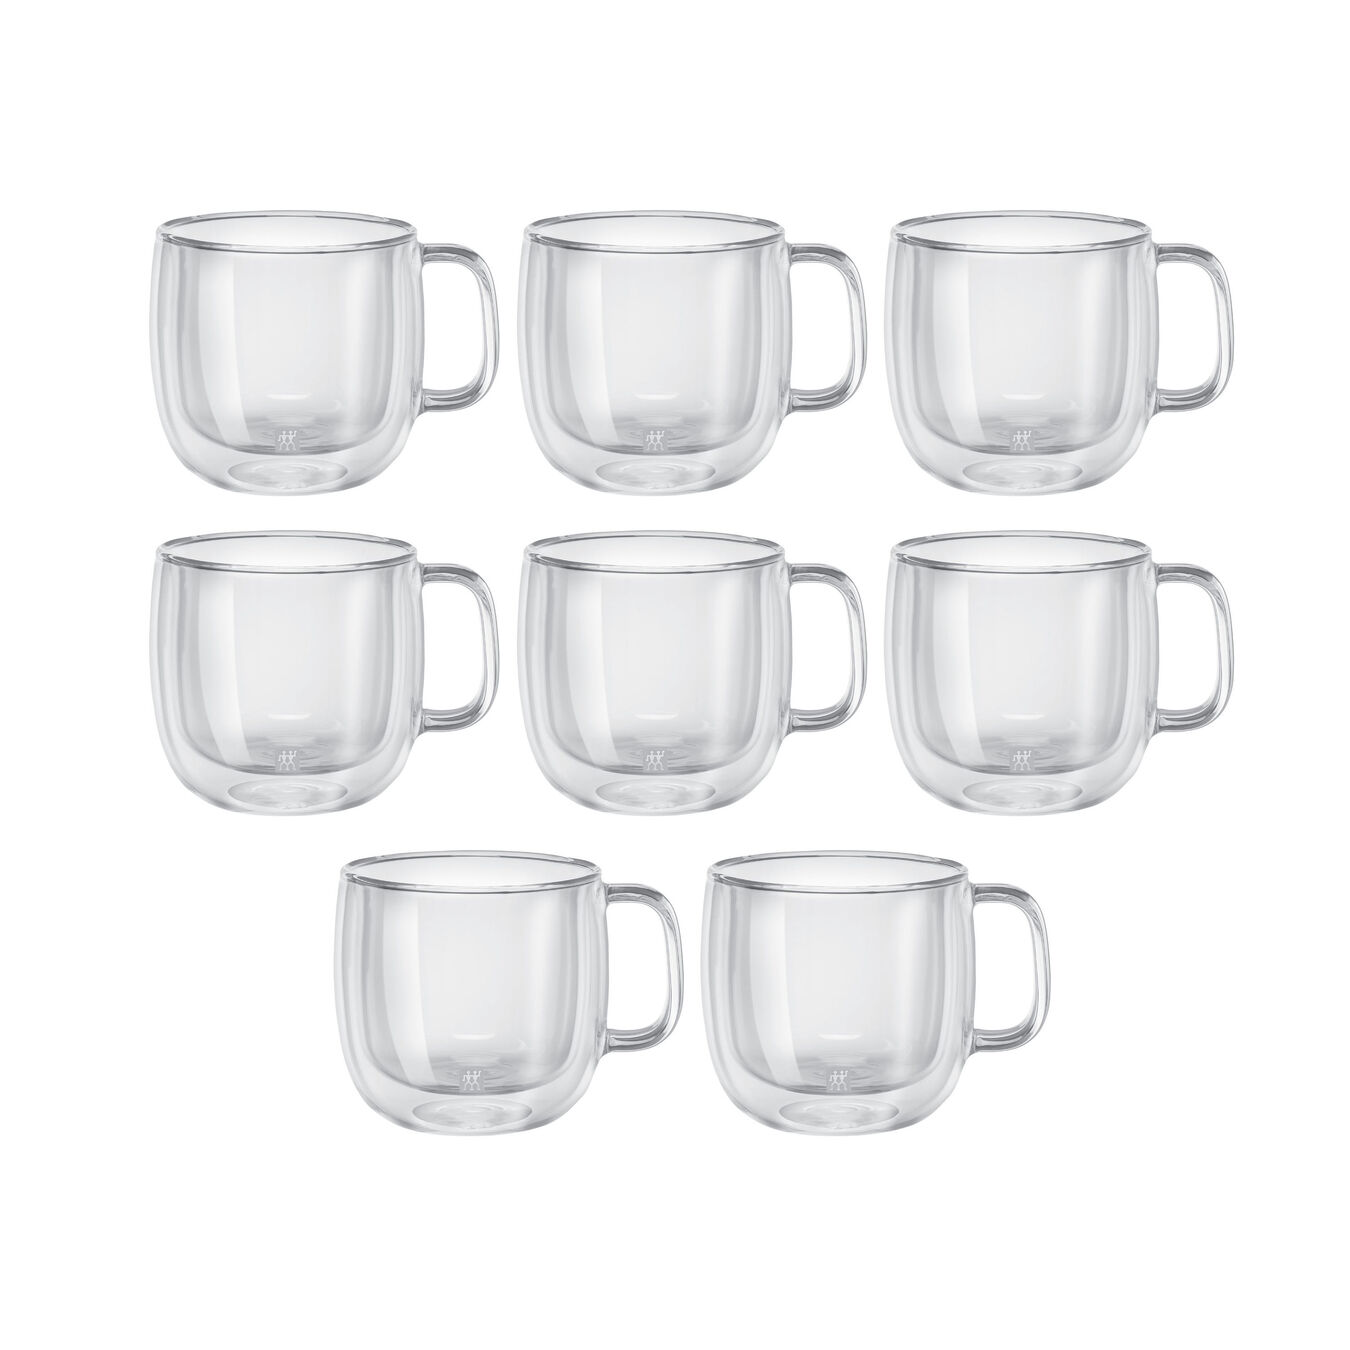 8 Piece Cappuccino Mug Set - Value Pack,,large 1